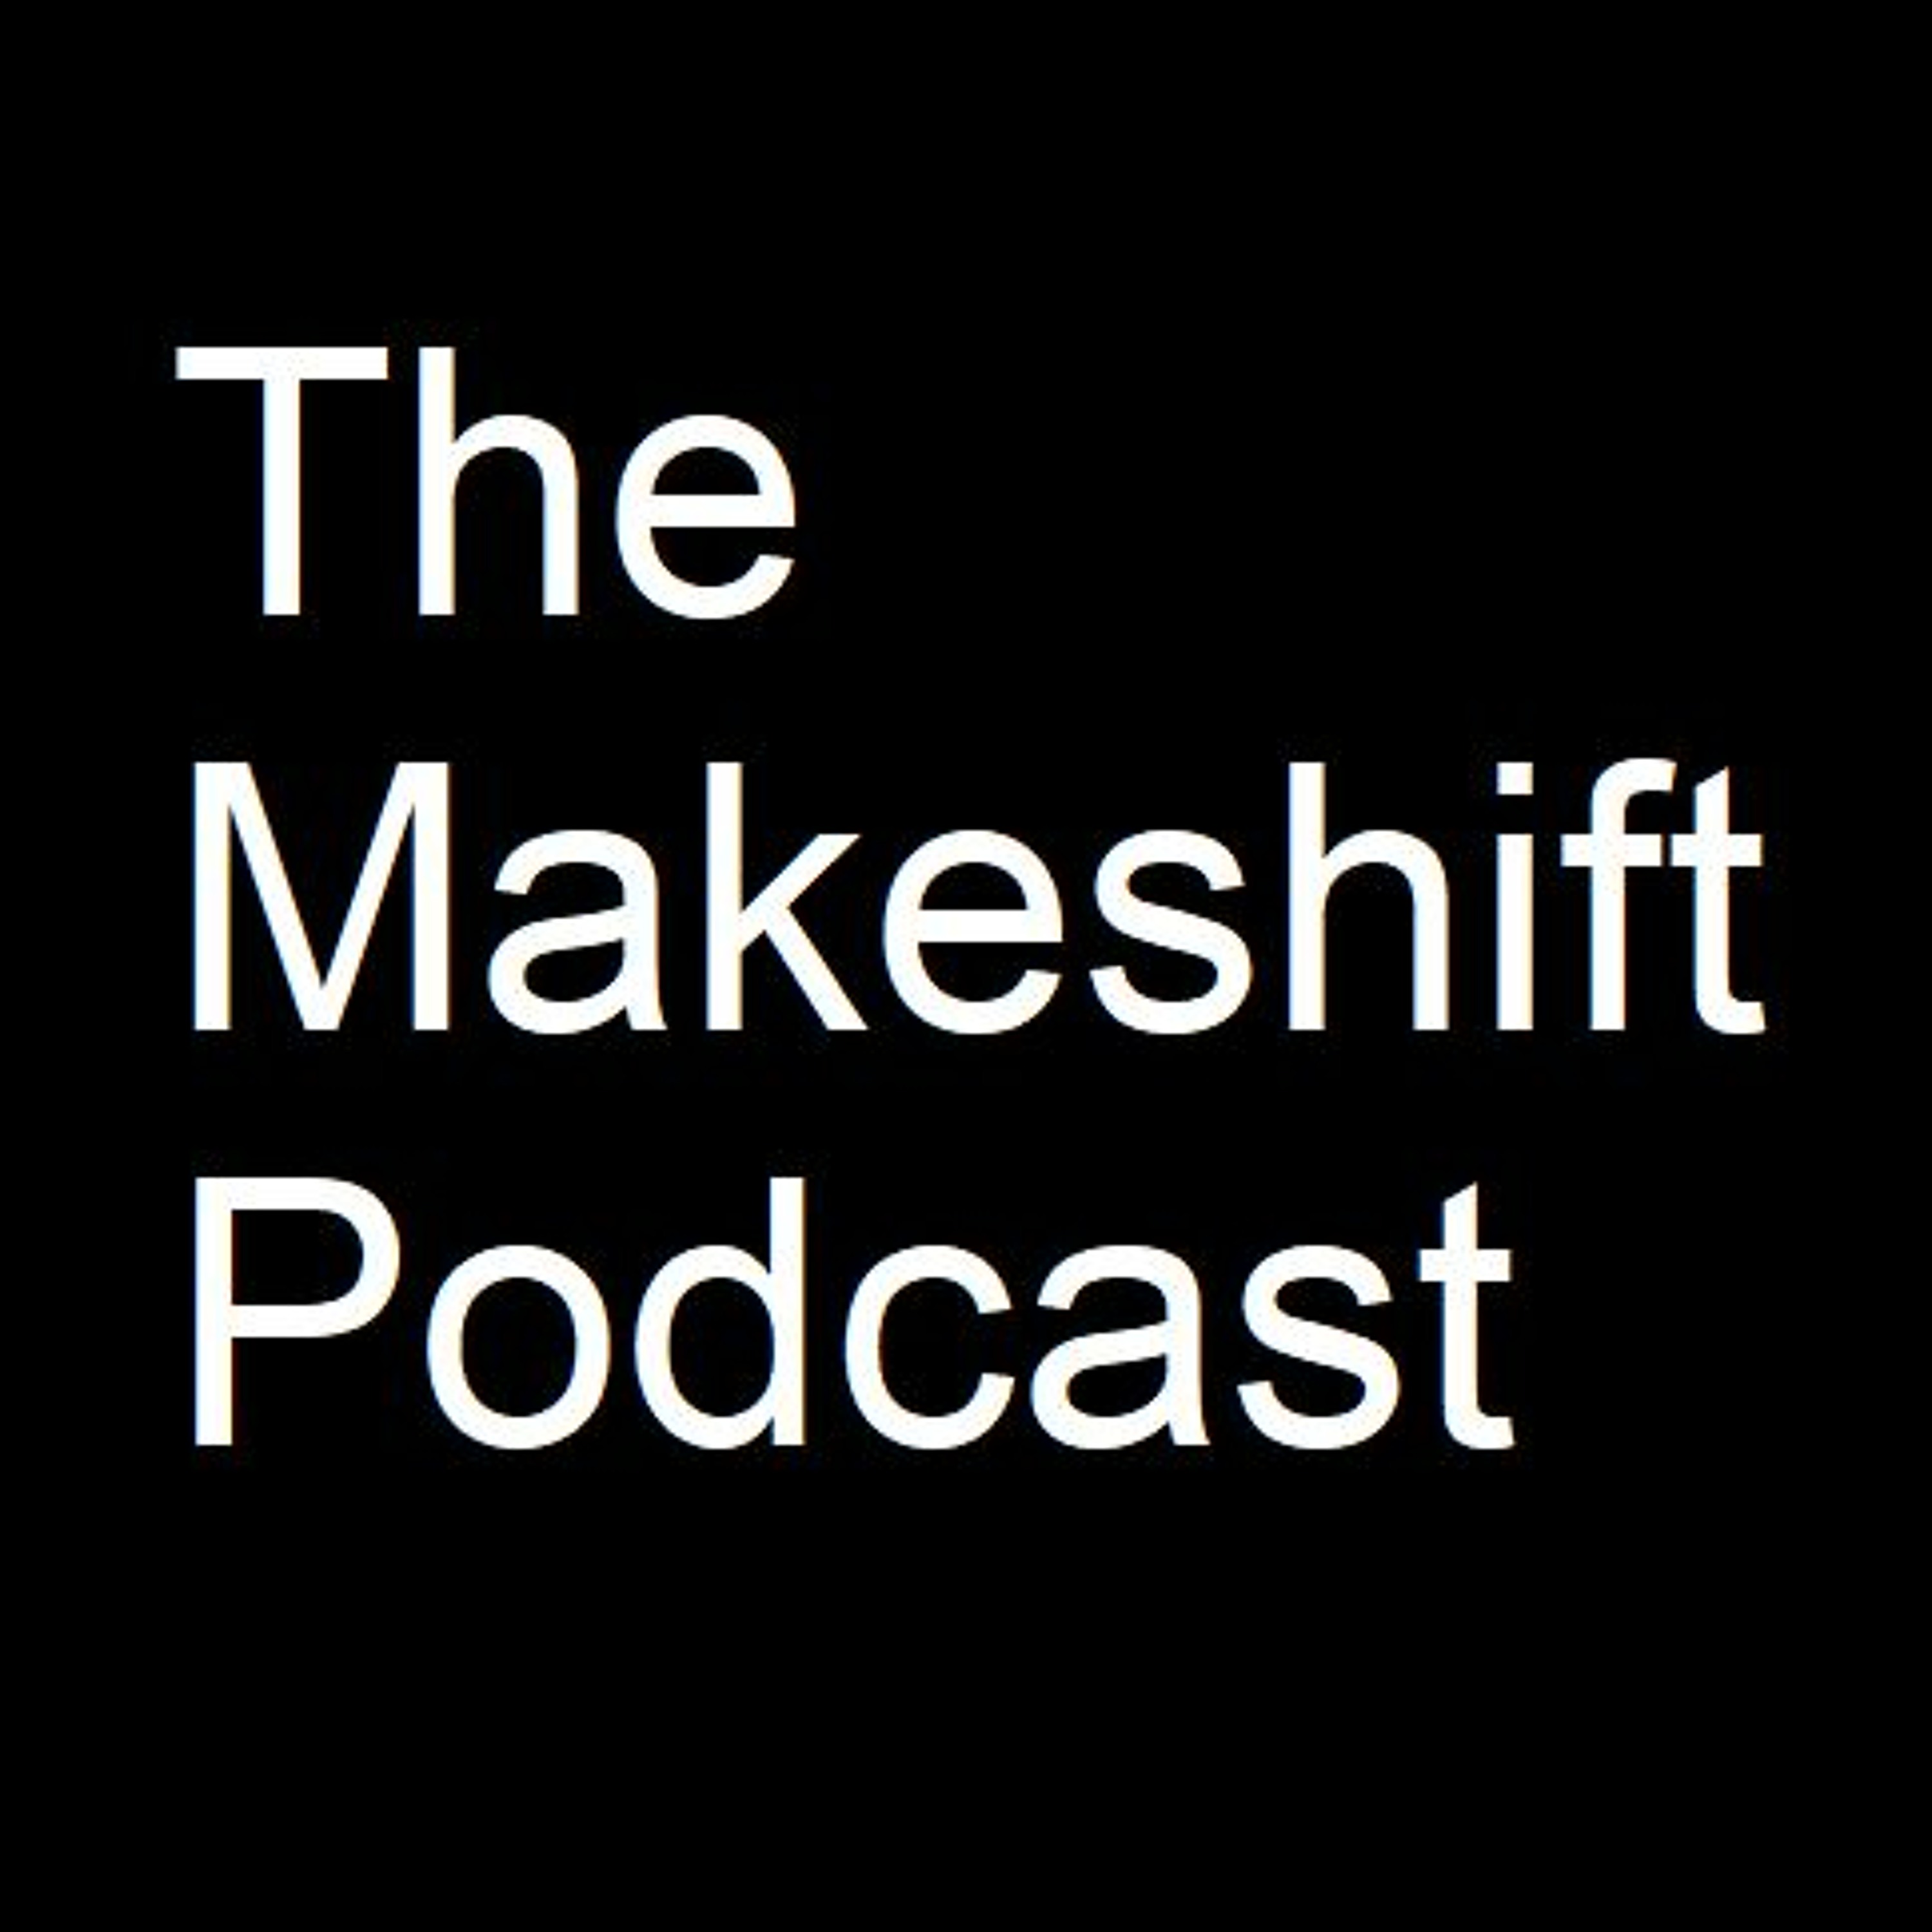 The Makeshift Podcast - Lingerie Arguments & Divorced Men’s Life Expectancy